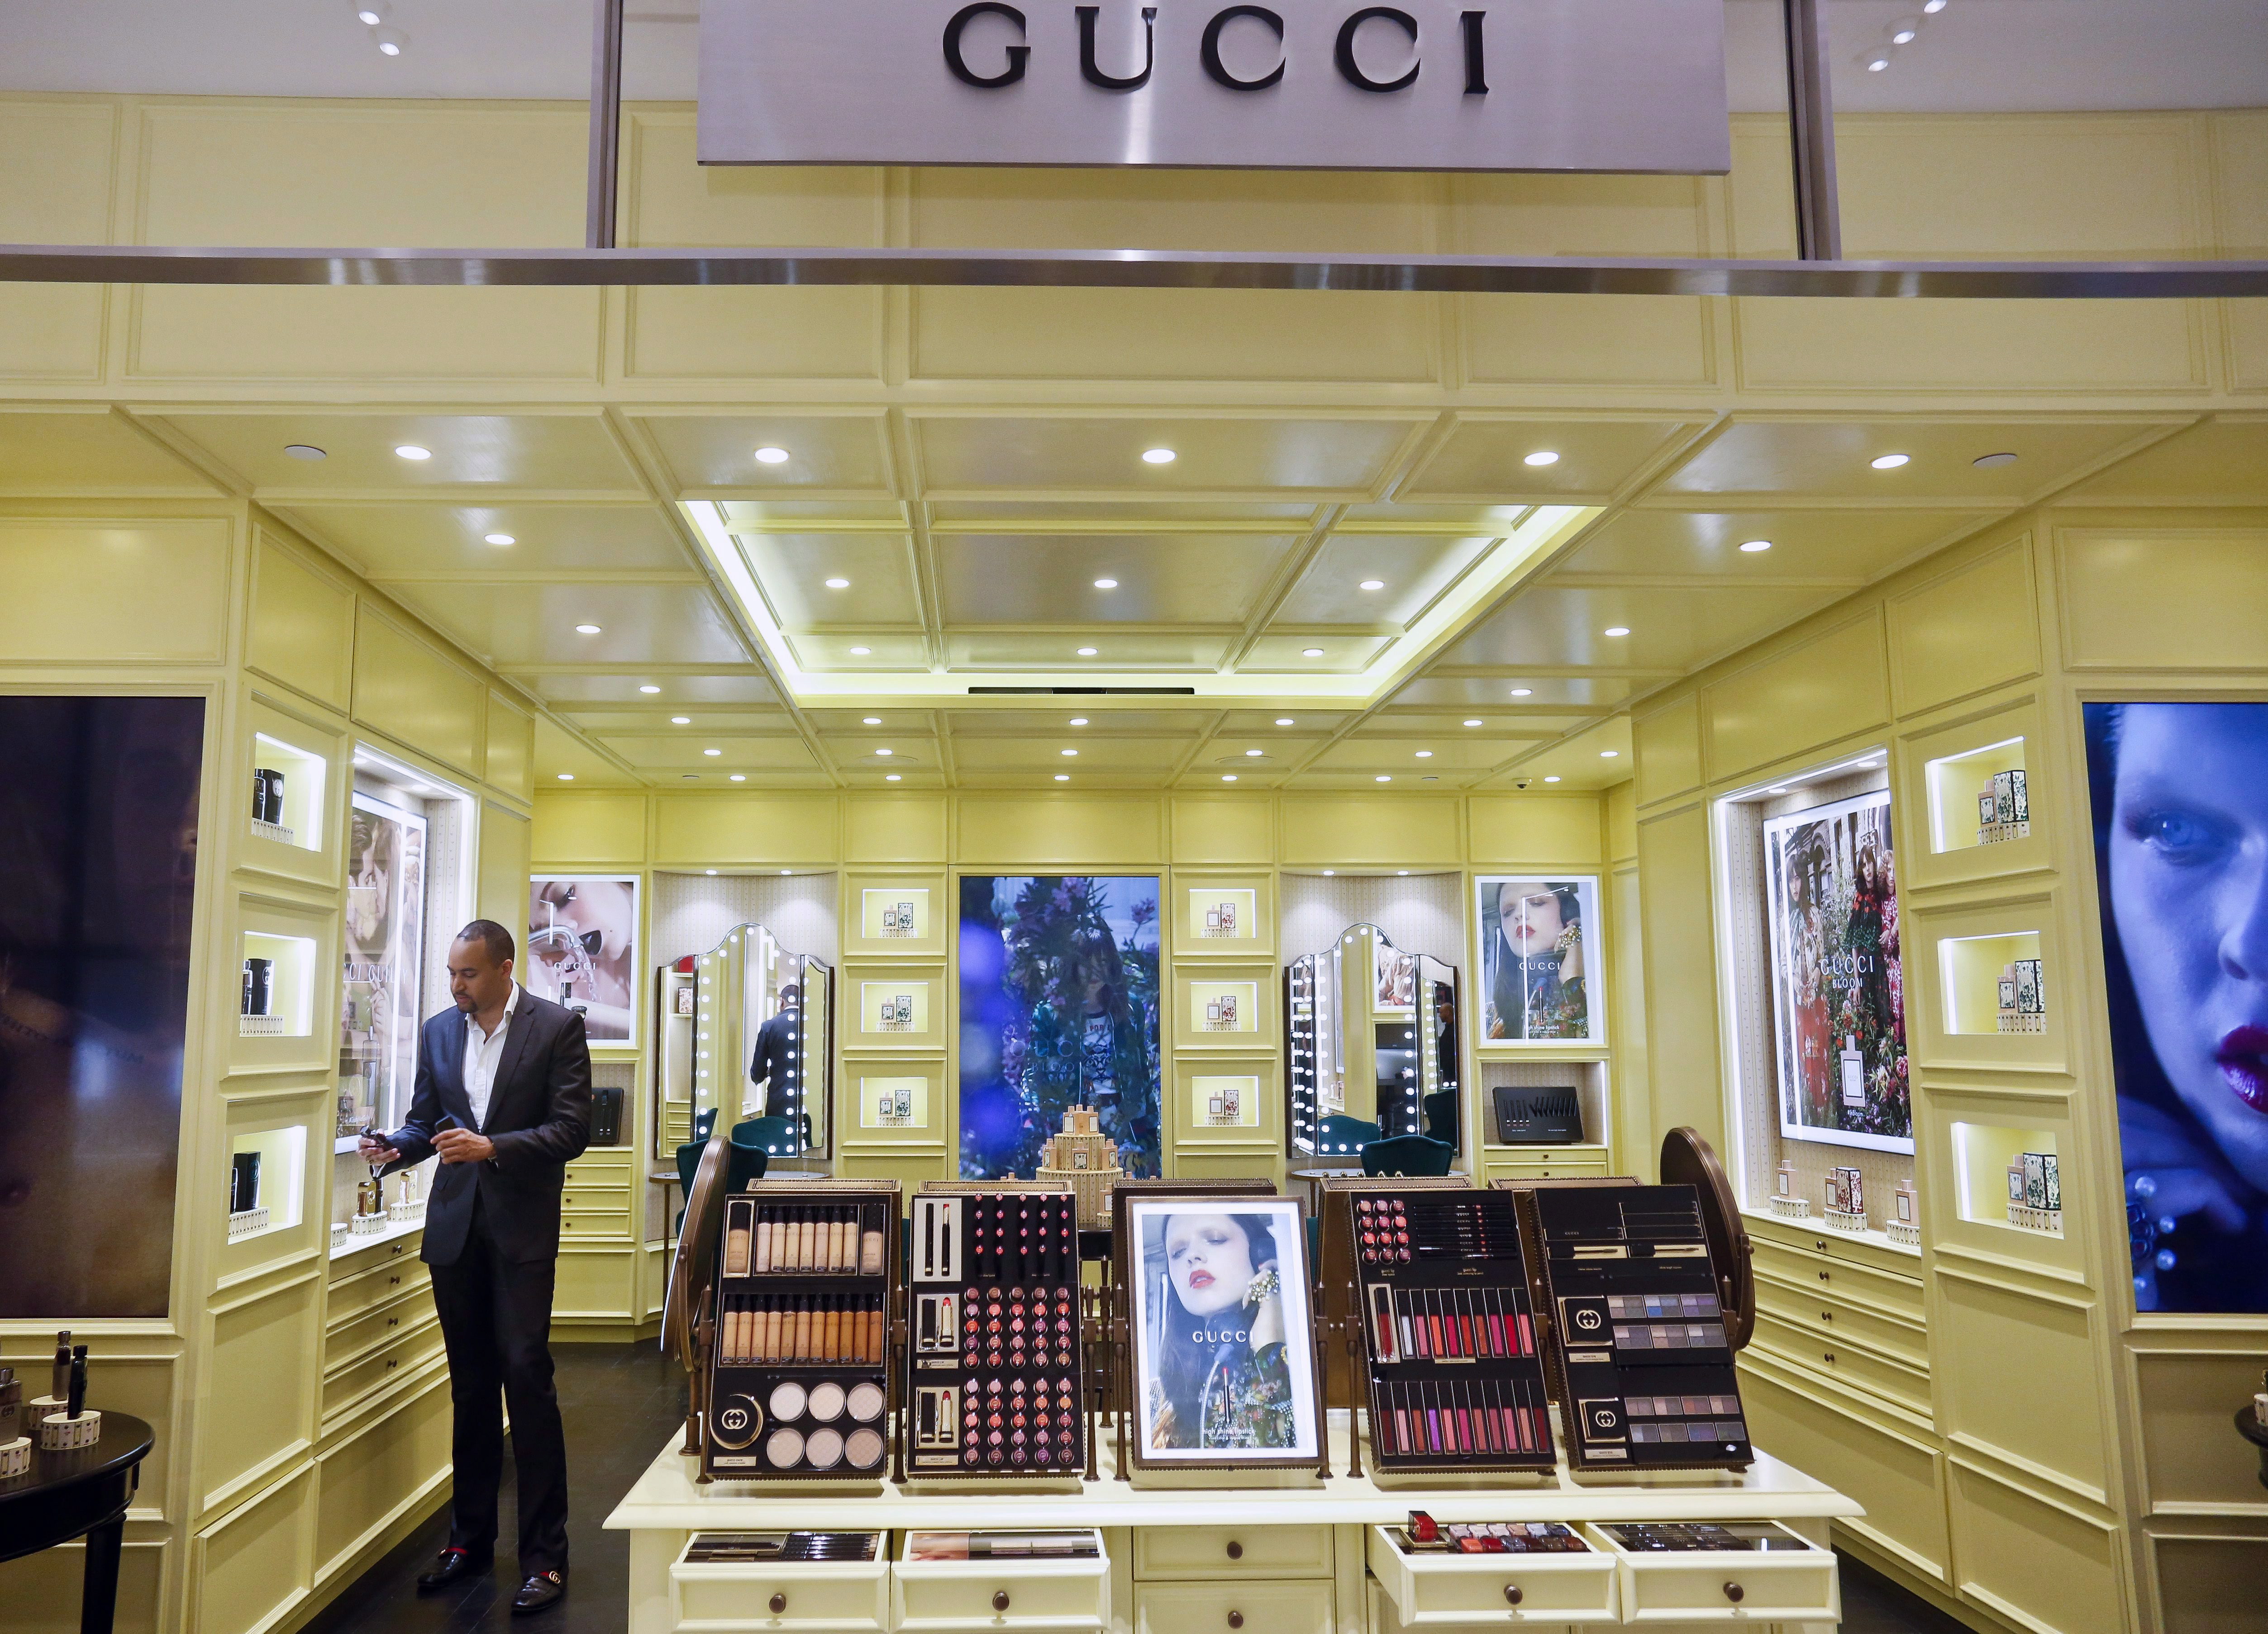 Toronto woman suing Gucci, Saks over 